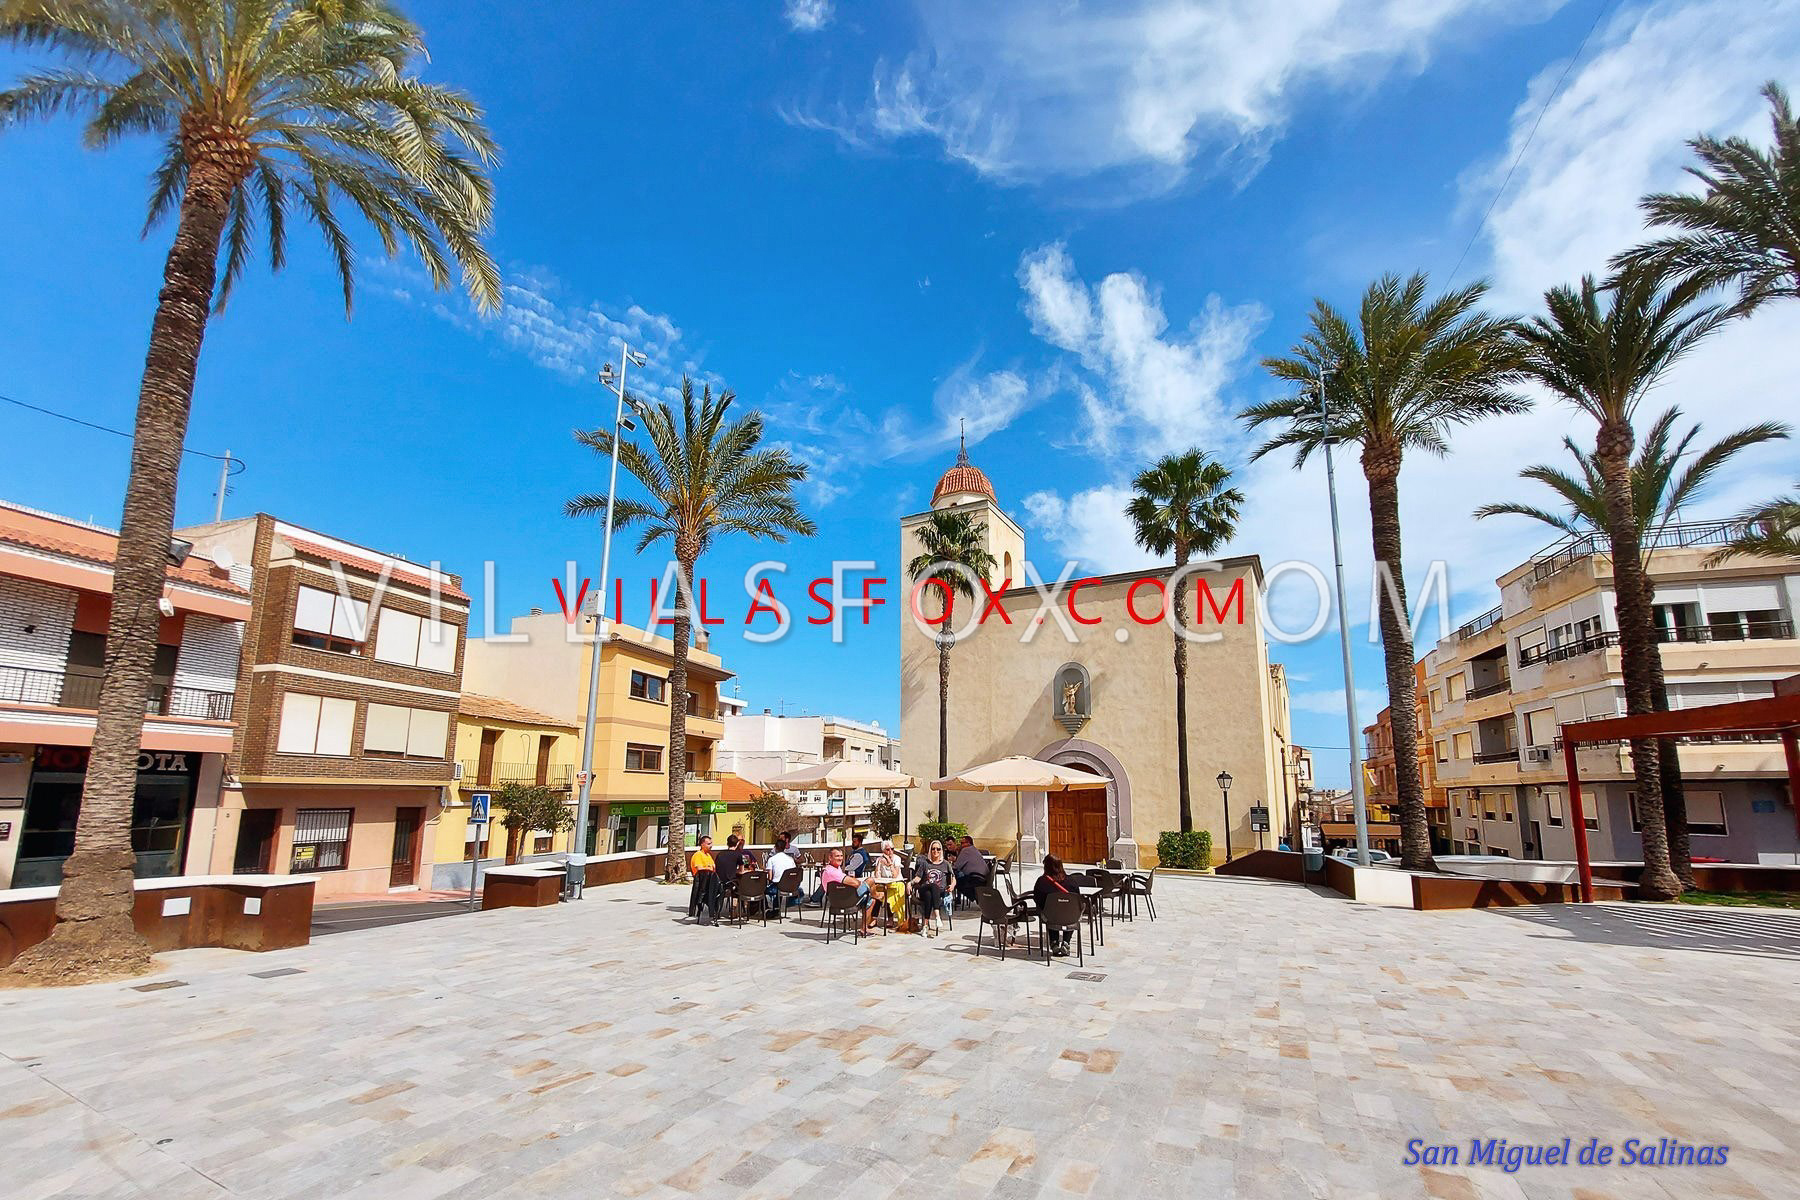 21_San_Miguel_de_Salinas_Apartment_in_Town_centre_by_Villas_Fox_best_estate_agents_61a359b2c816c